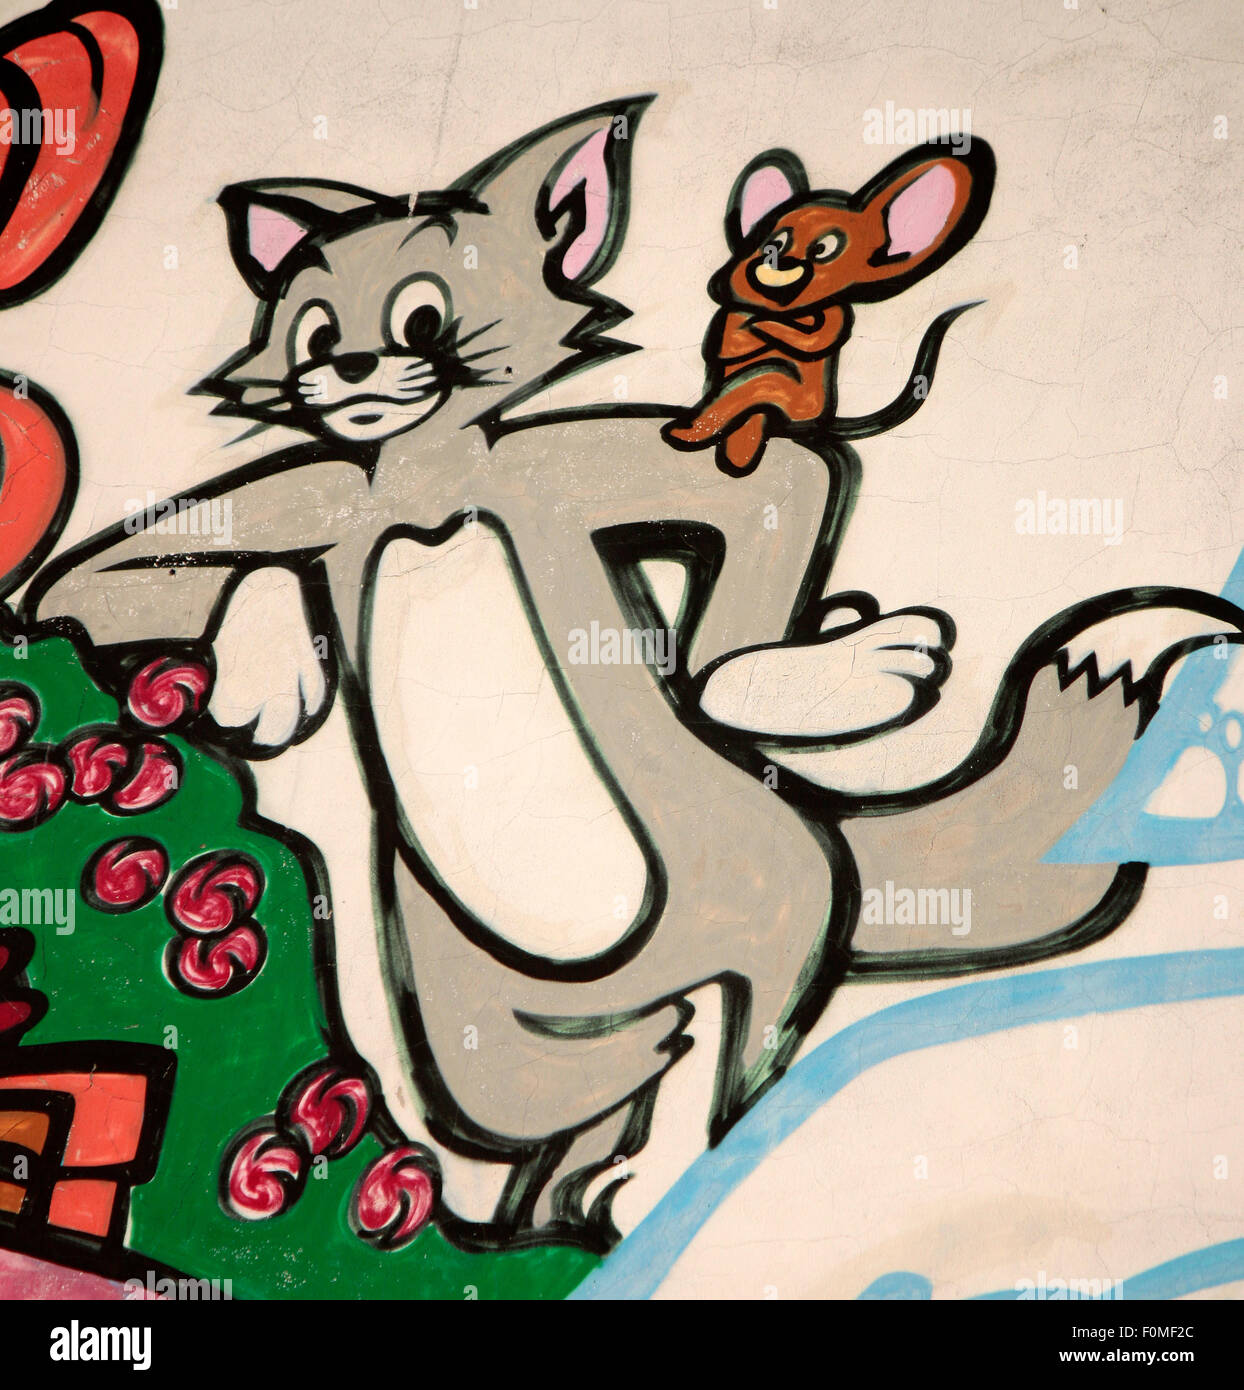 Graffity/ Street Art: Tom und Jerry, Berlin. Stock Photo